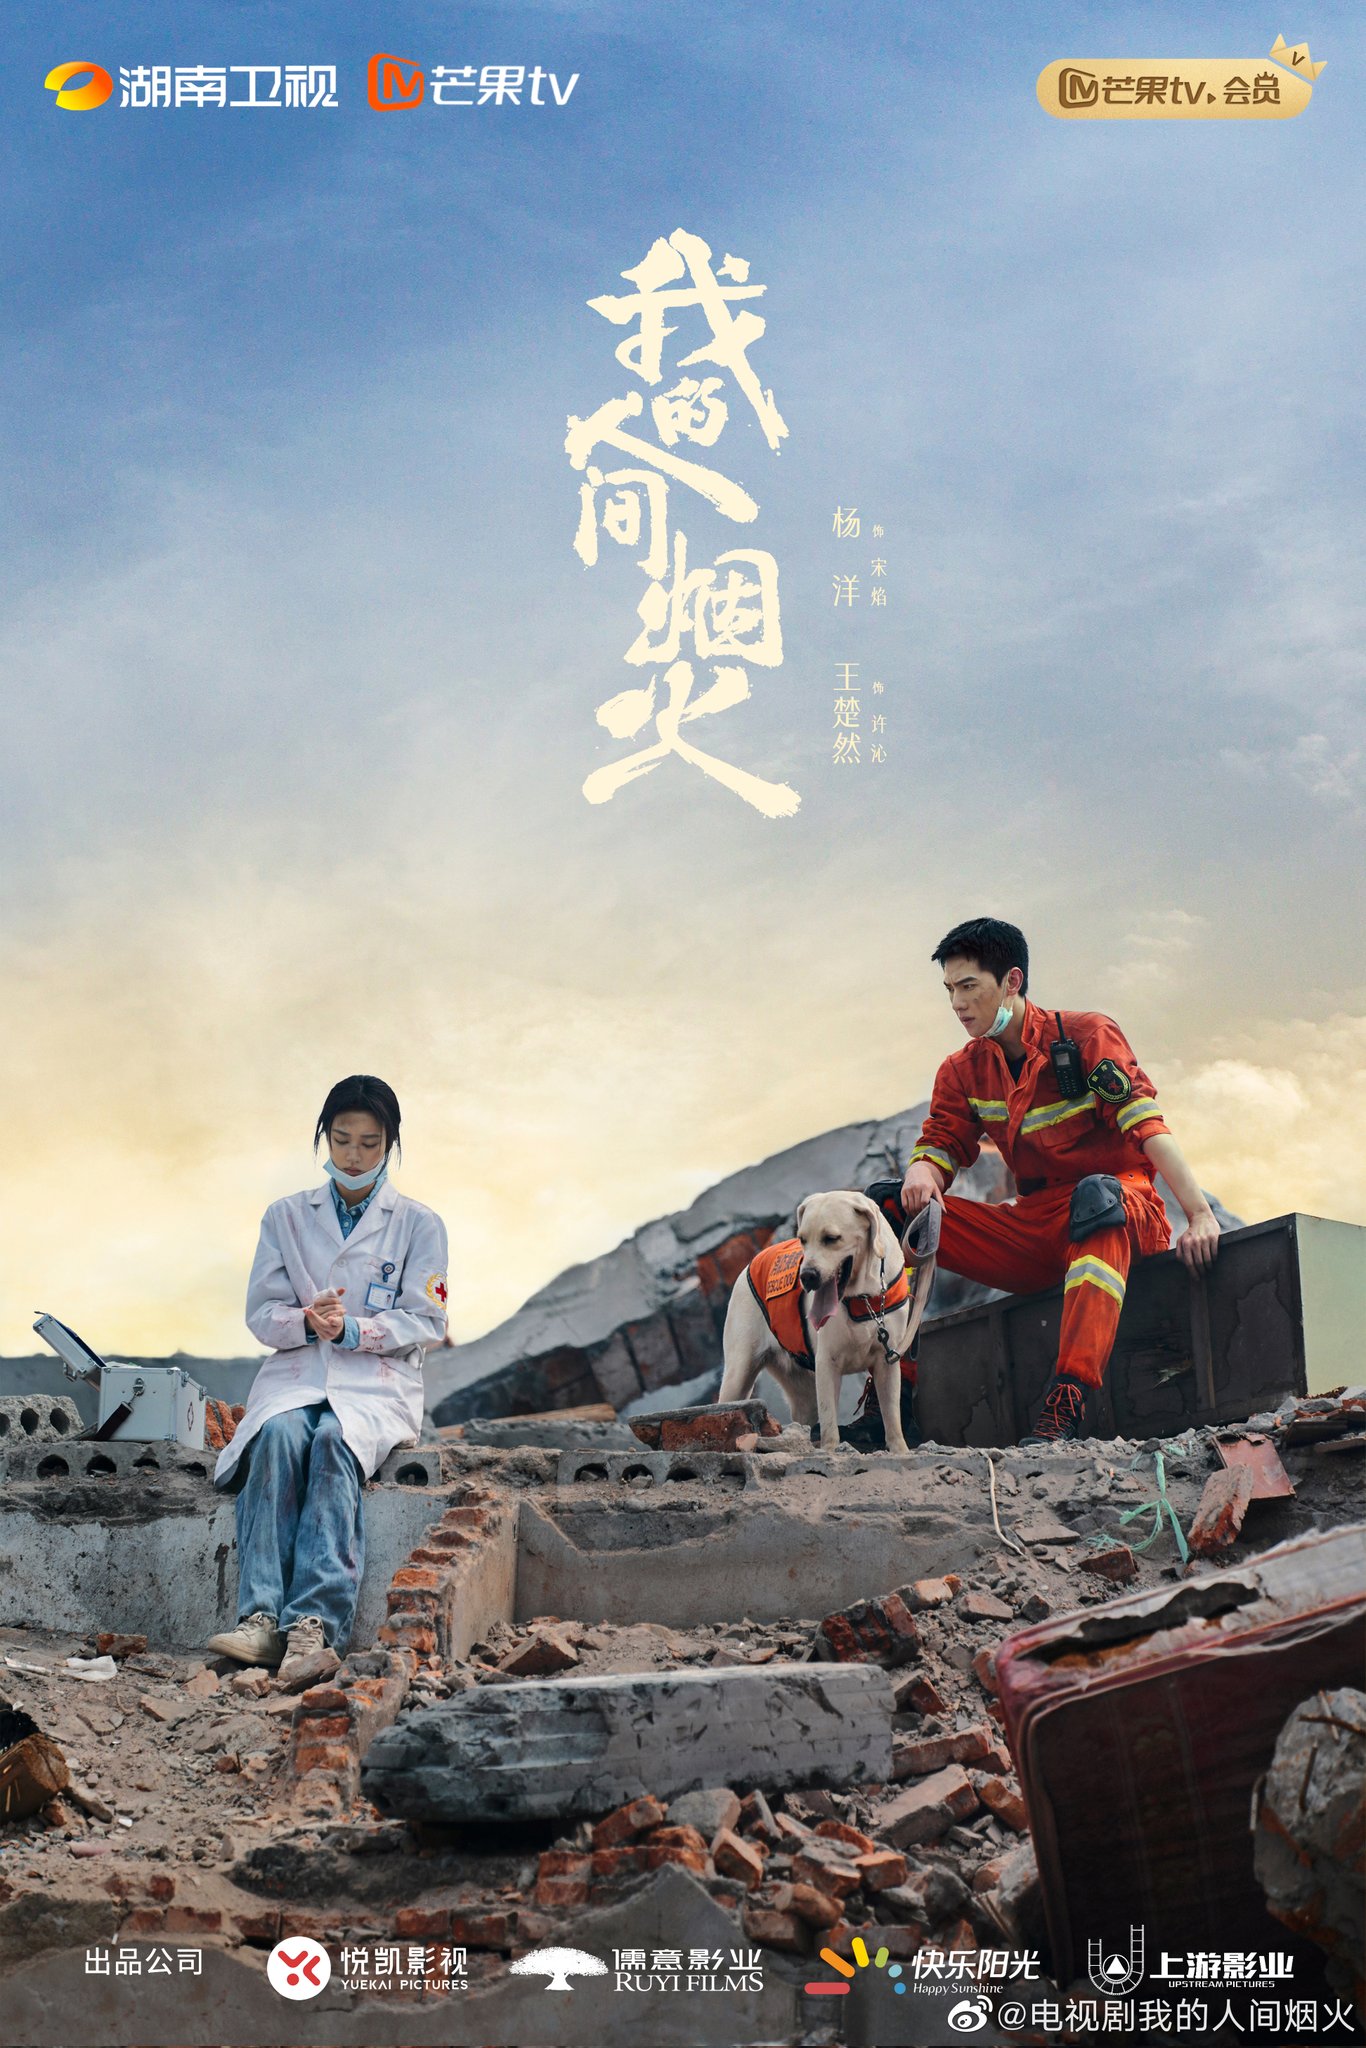 cdrama tweets auf X: „Sweet historical romance, #MyQueen, starring  #LaiMeiyun and #WuJunyu, wraps filming #我的女主别太萌  / X